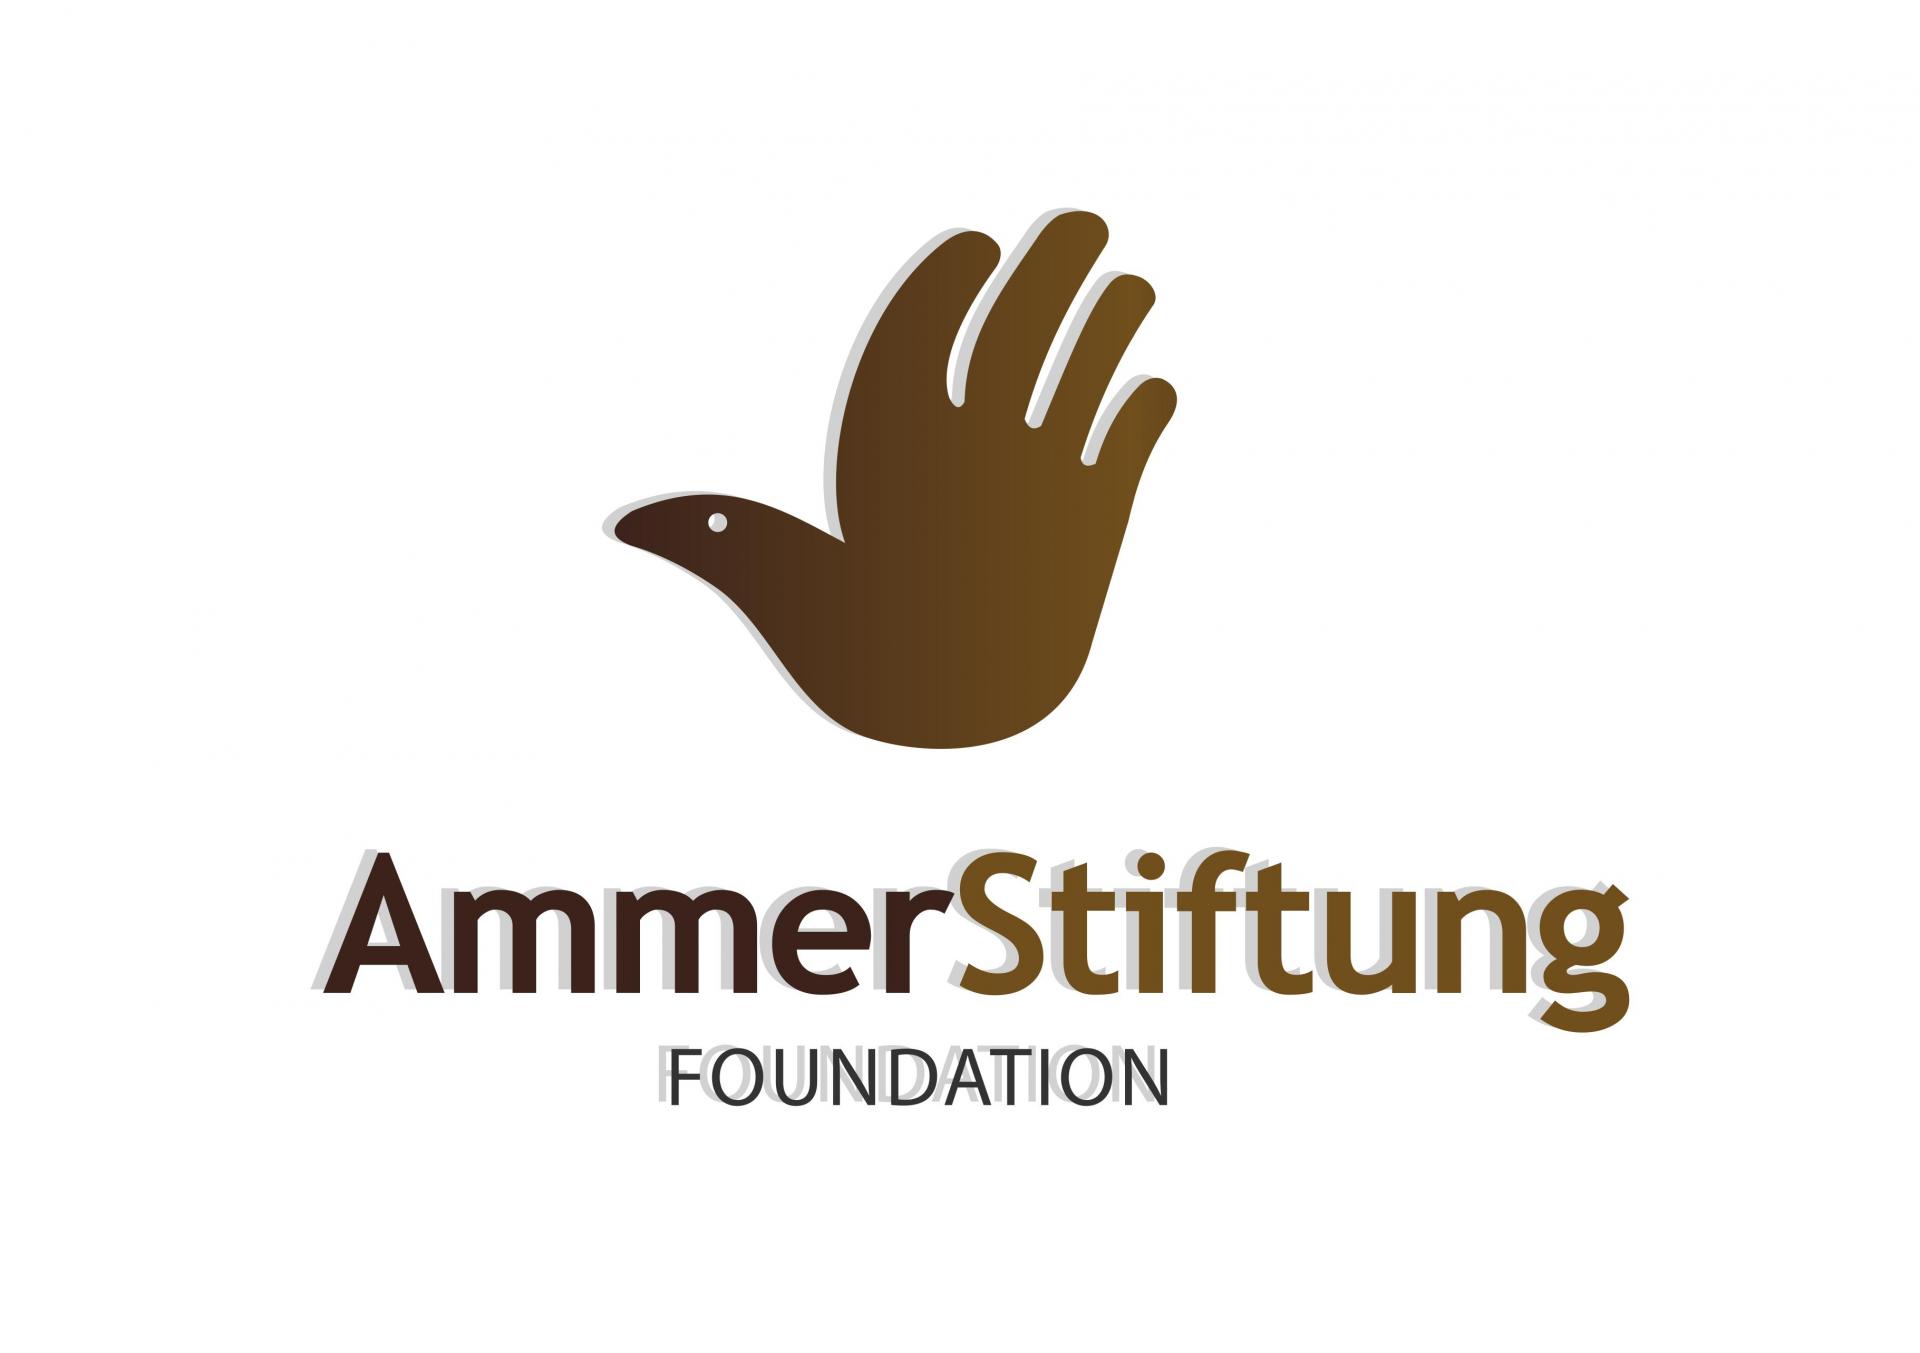 Ammer Stiftung